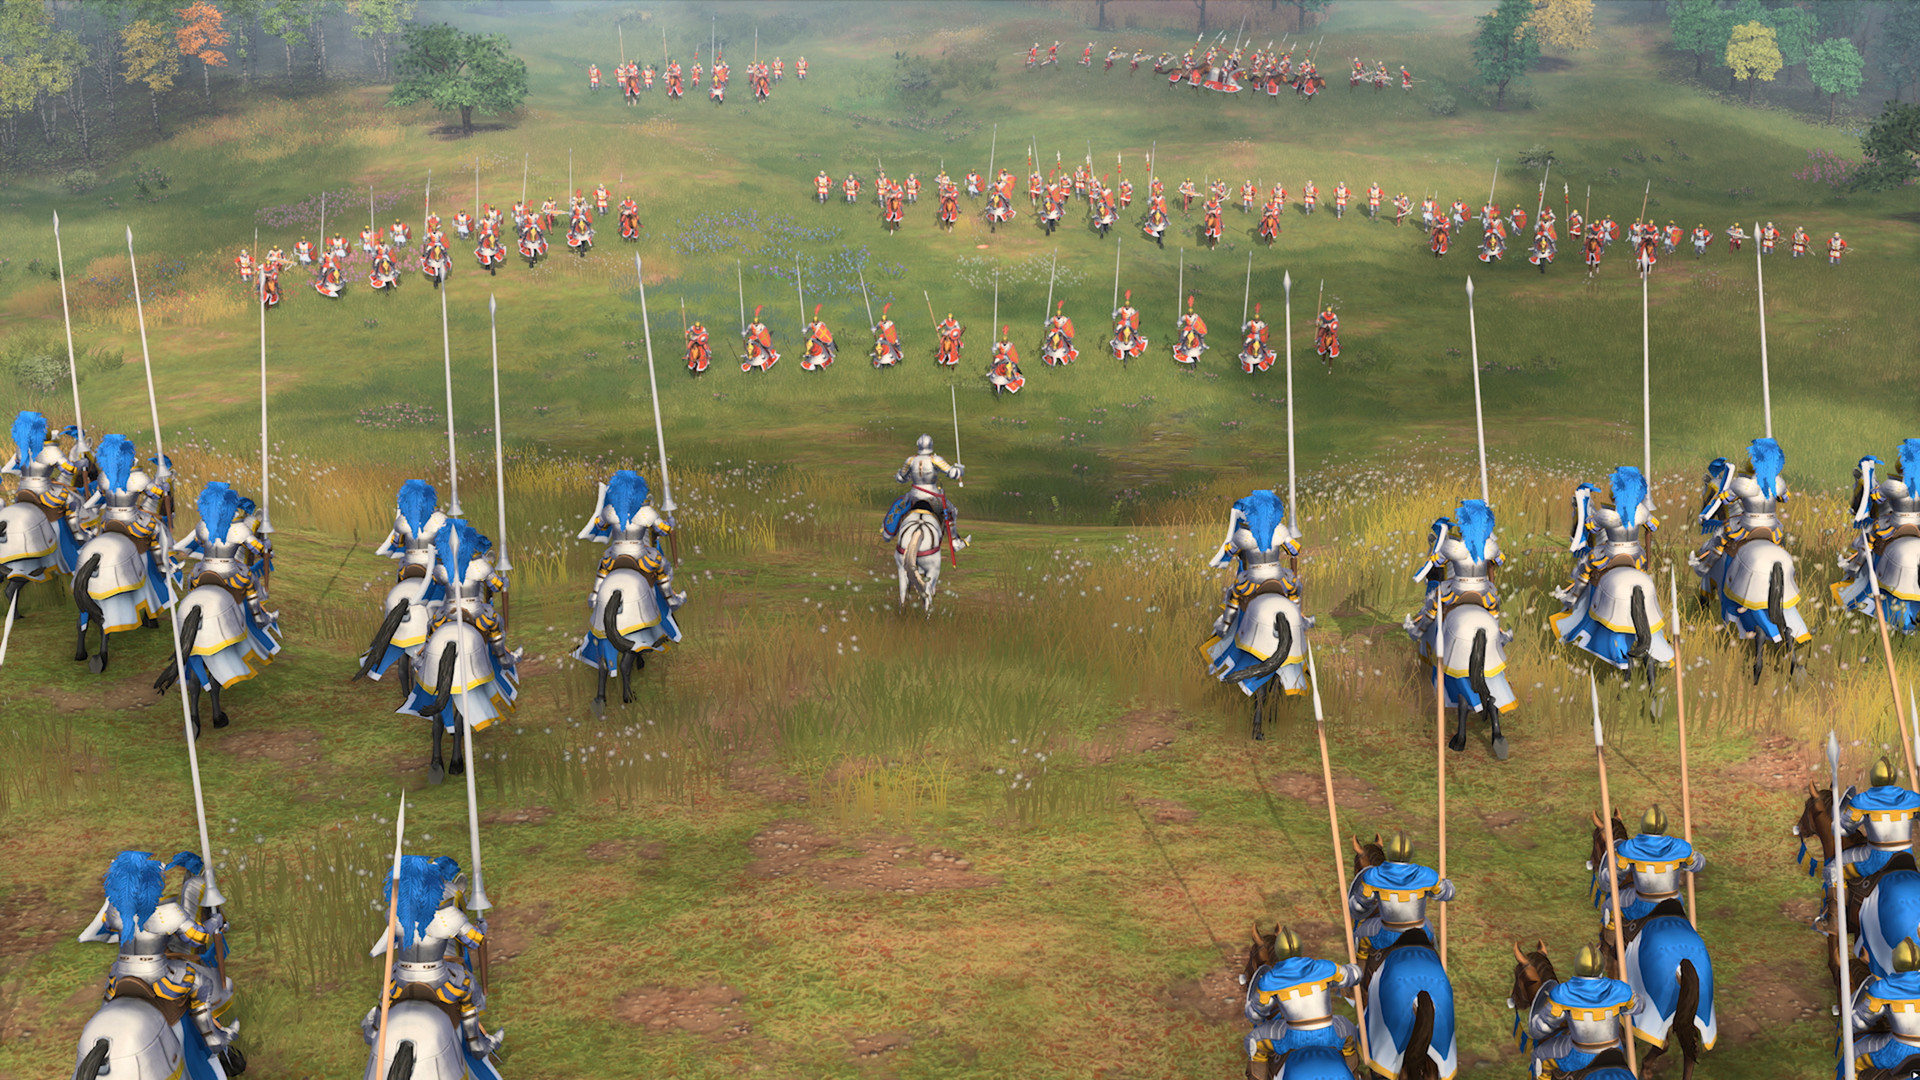 Age of Empires IV-CODEX screenshots